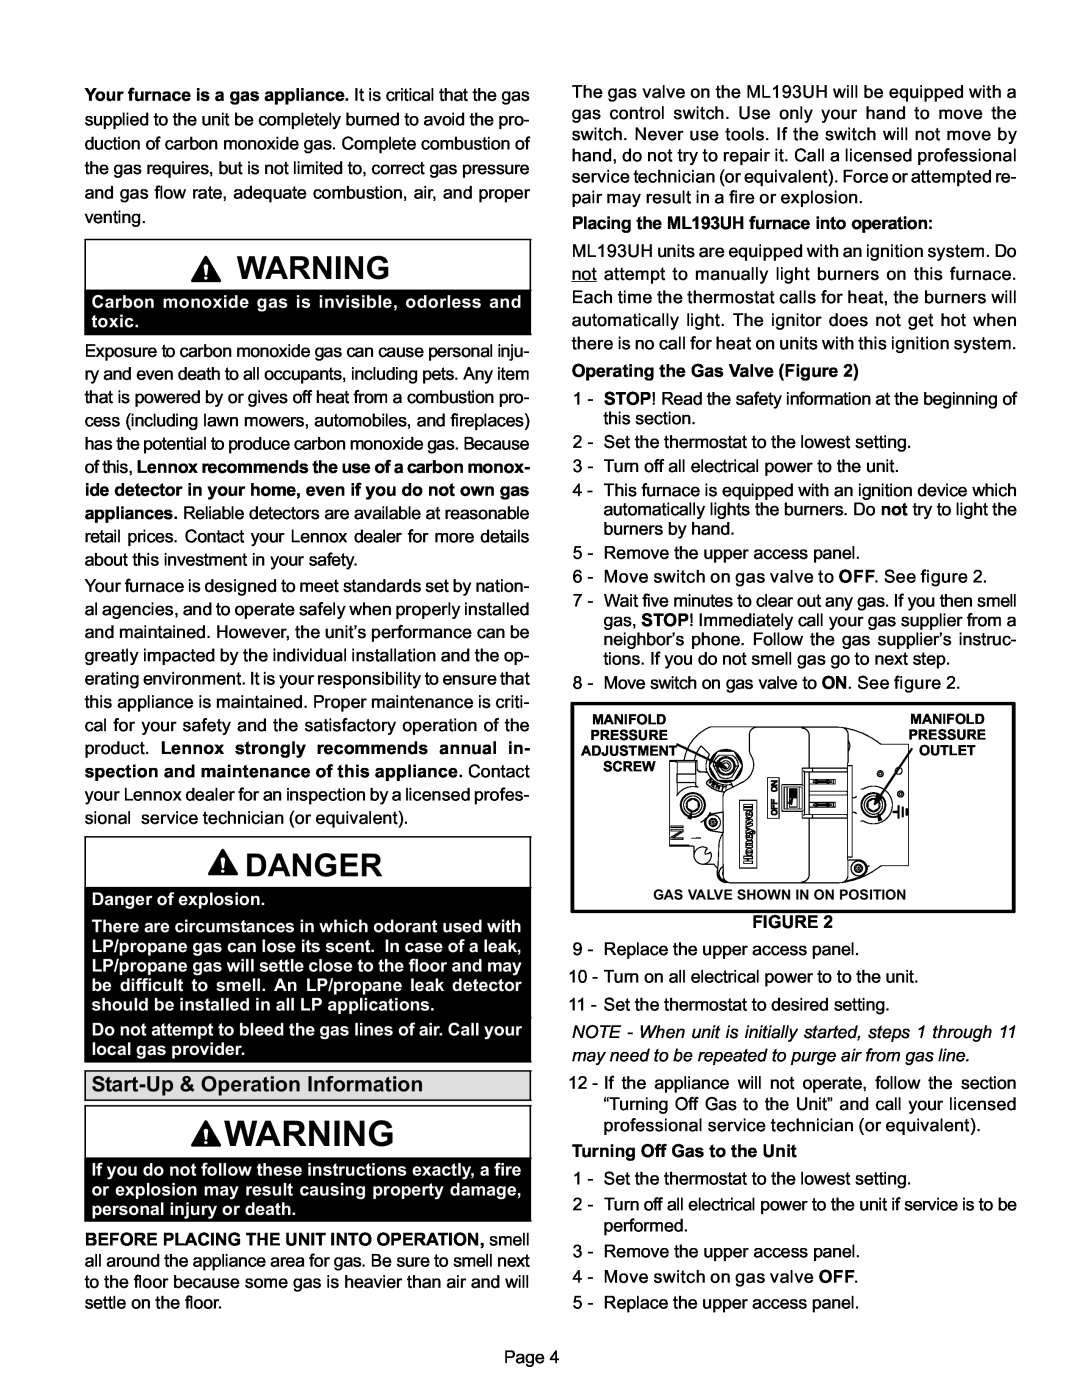 Lennox International Inc Gas Furnace manual Danger, Start−Up & Operation Information 